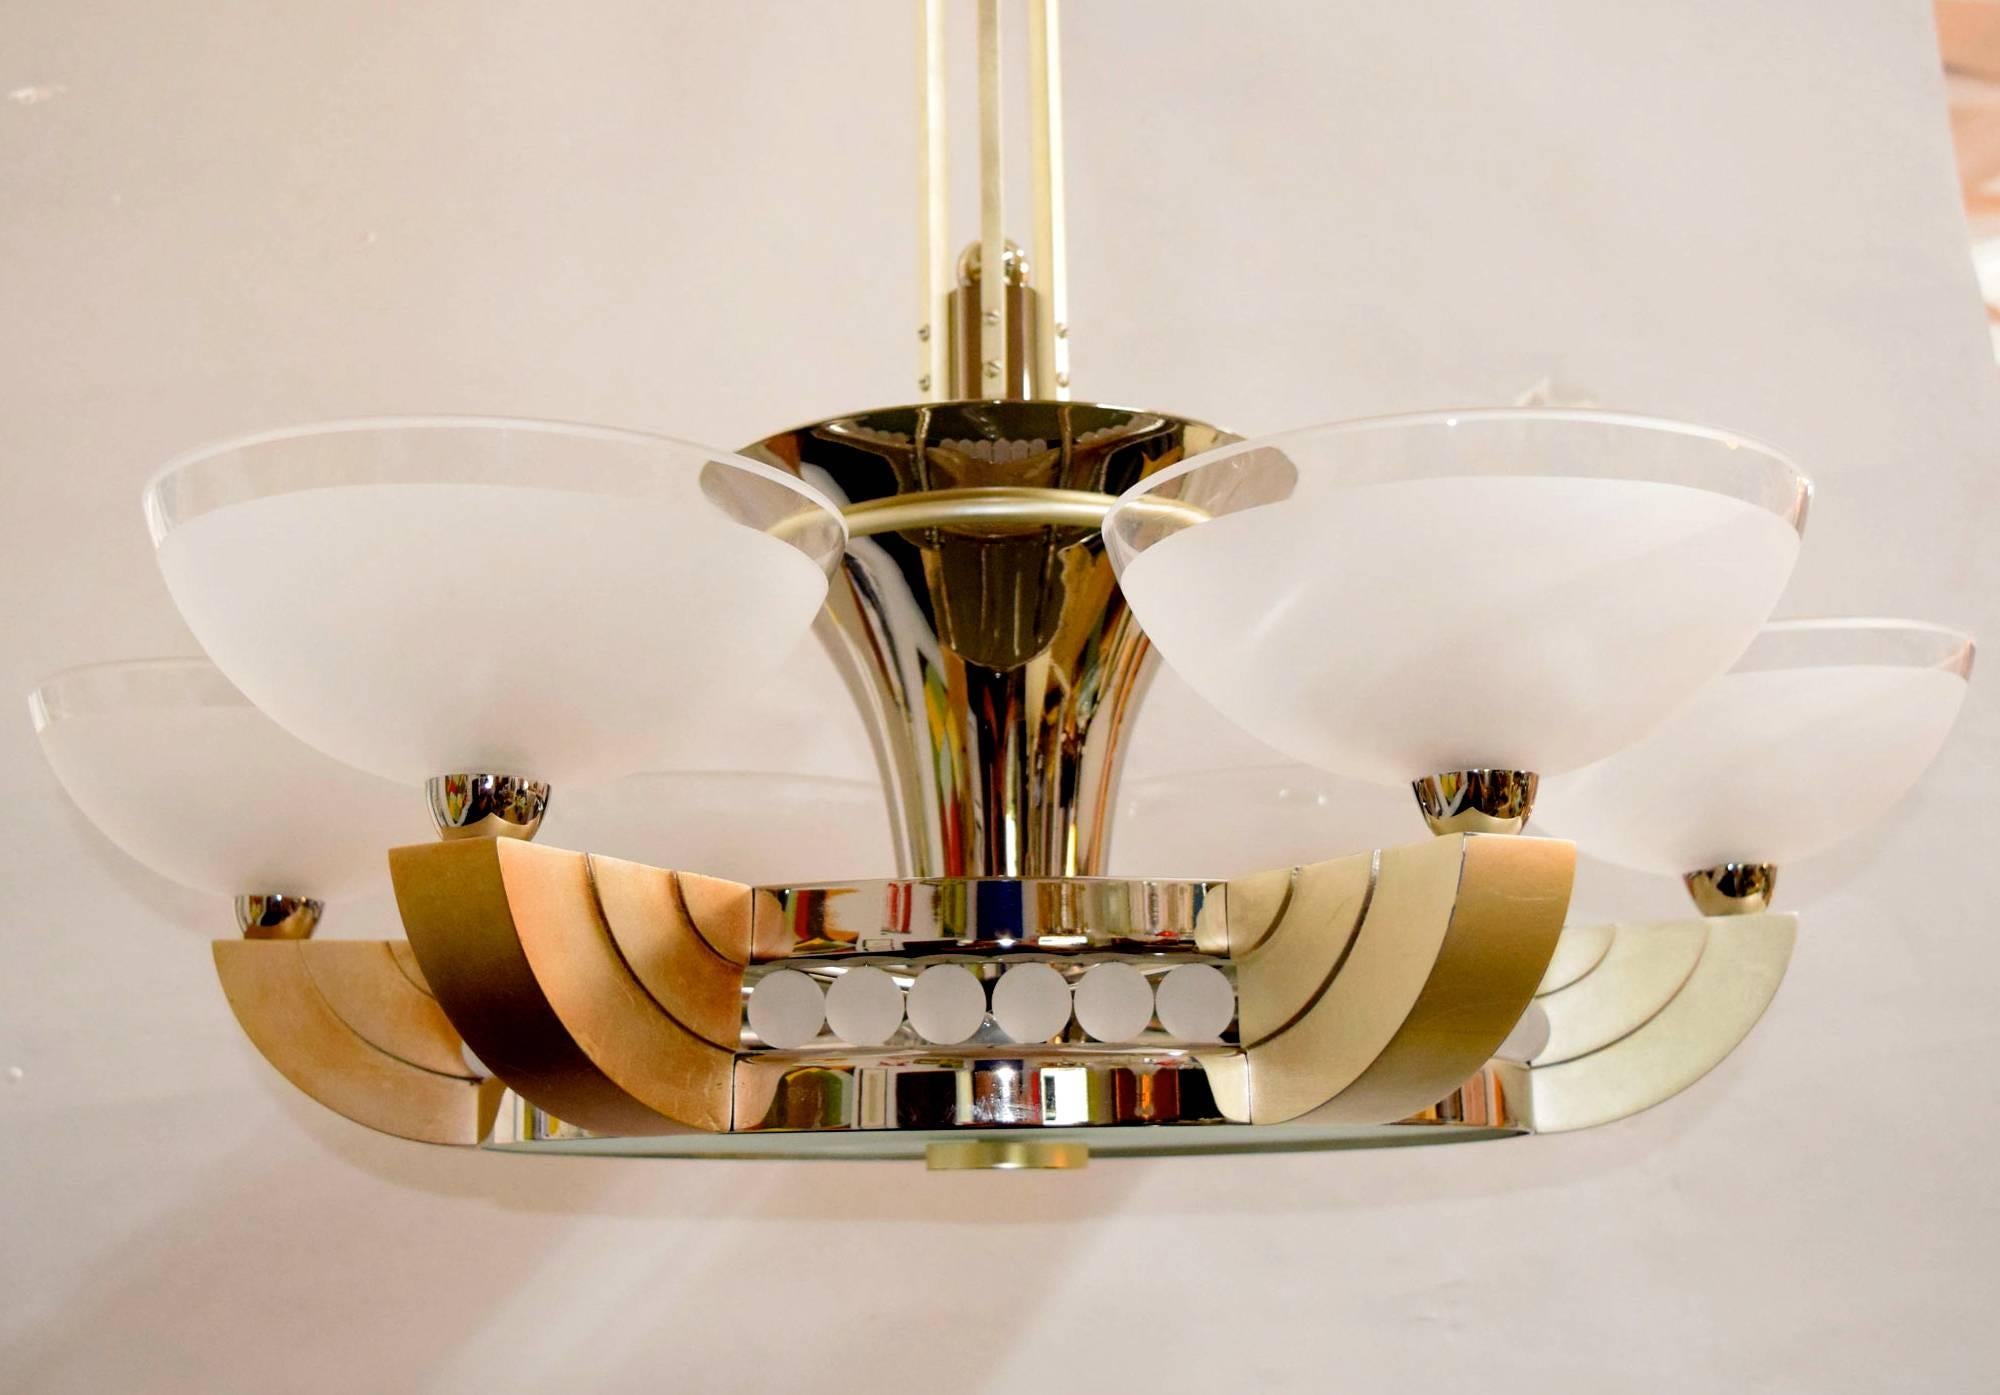 The Odette chandelier designed by Sally Sirkin Lewis for J. Robert Scott.